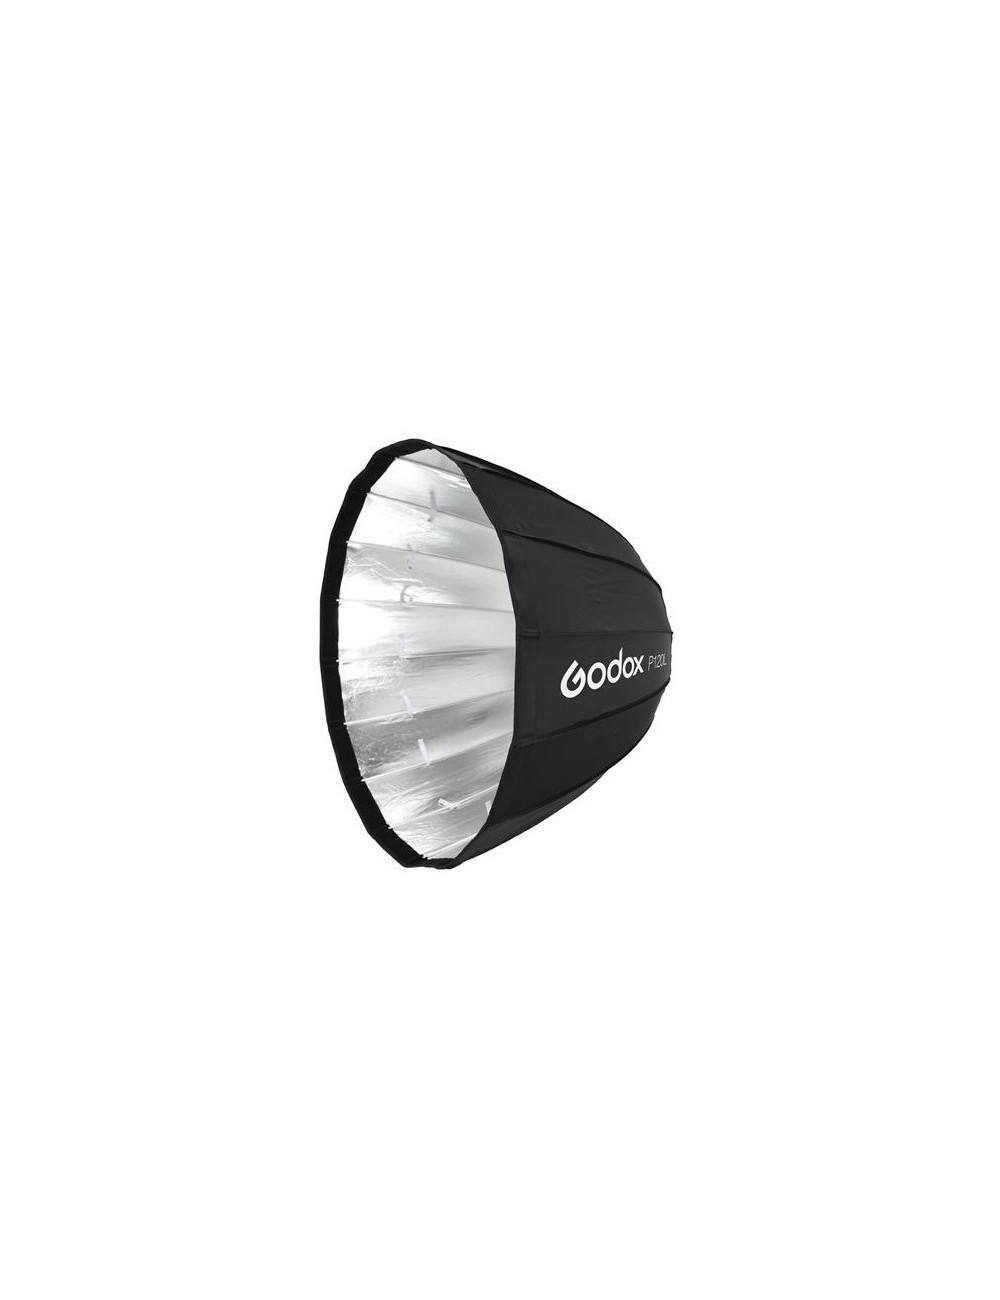 Softbox Godox de 60×60 Con Montura Bowen´s - Negro